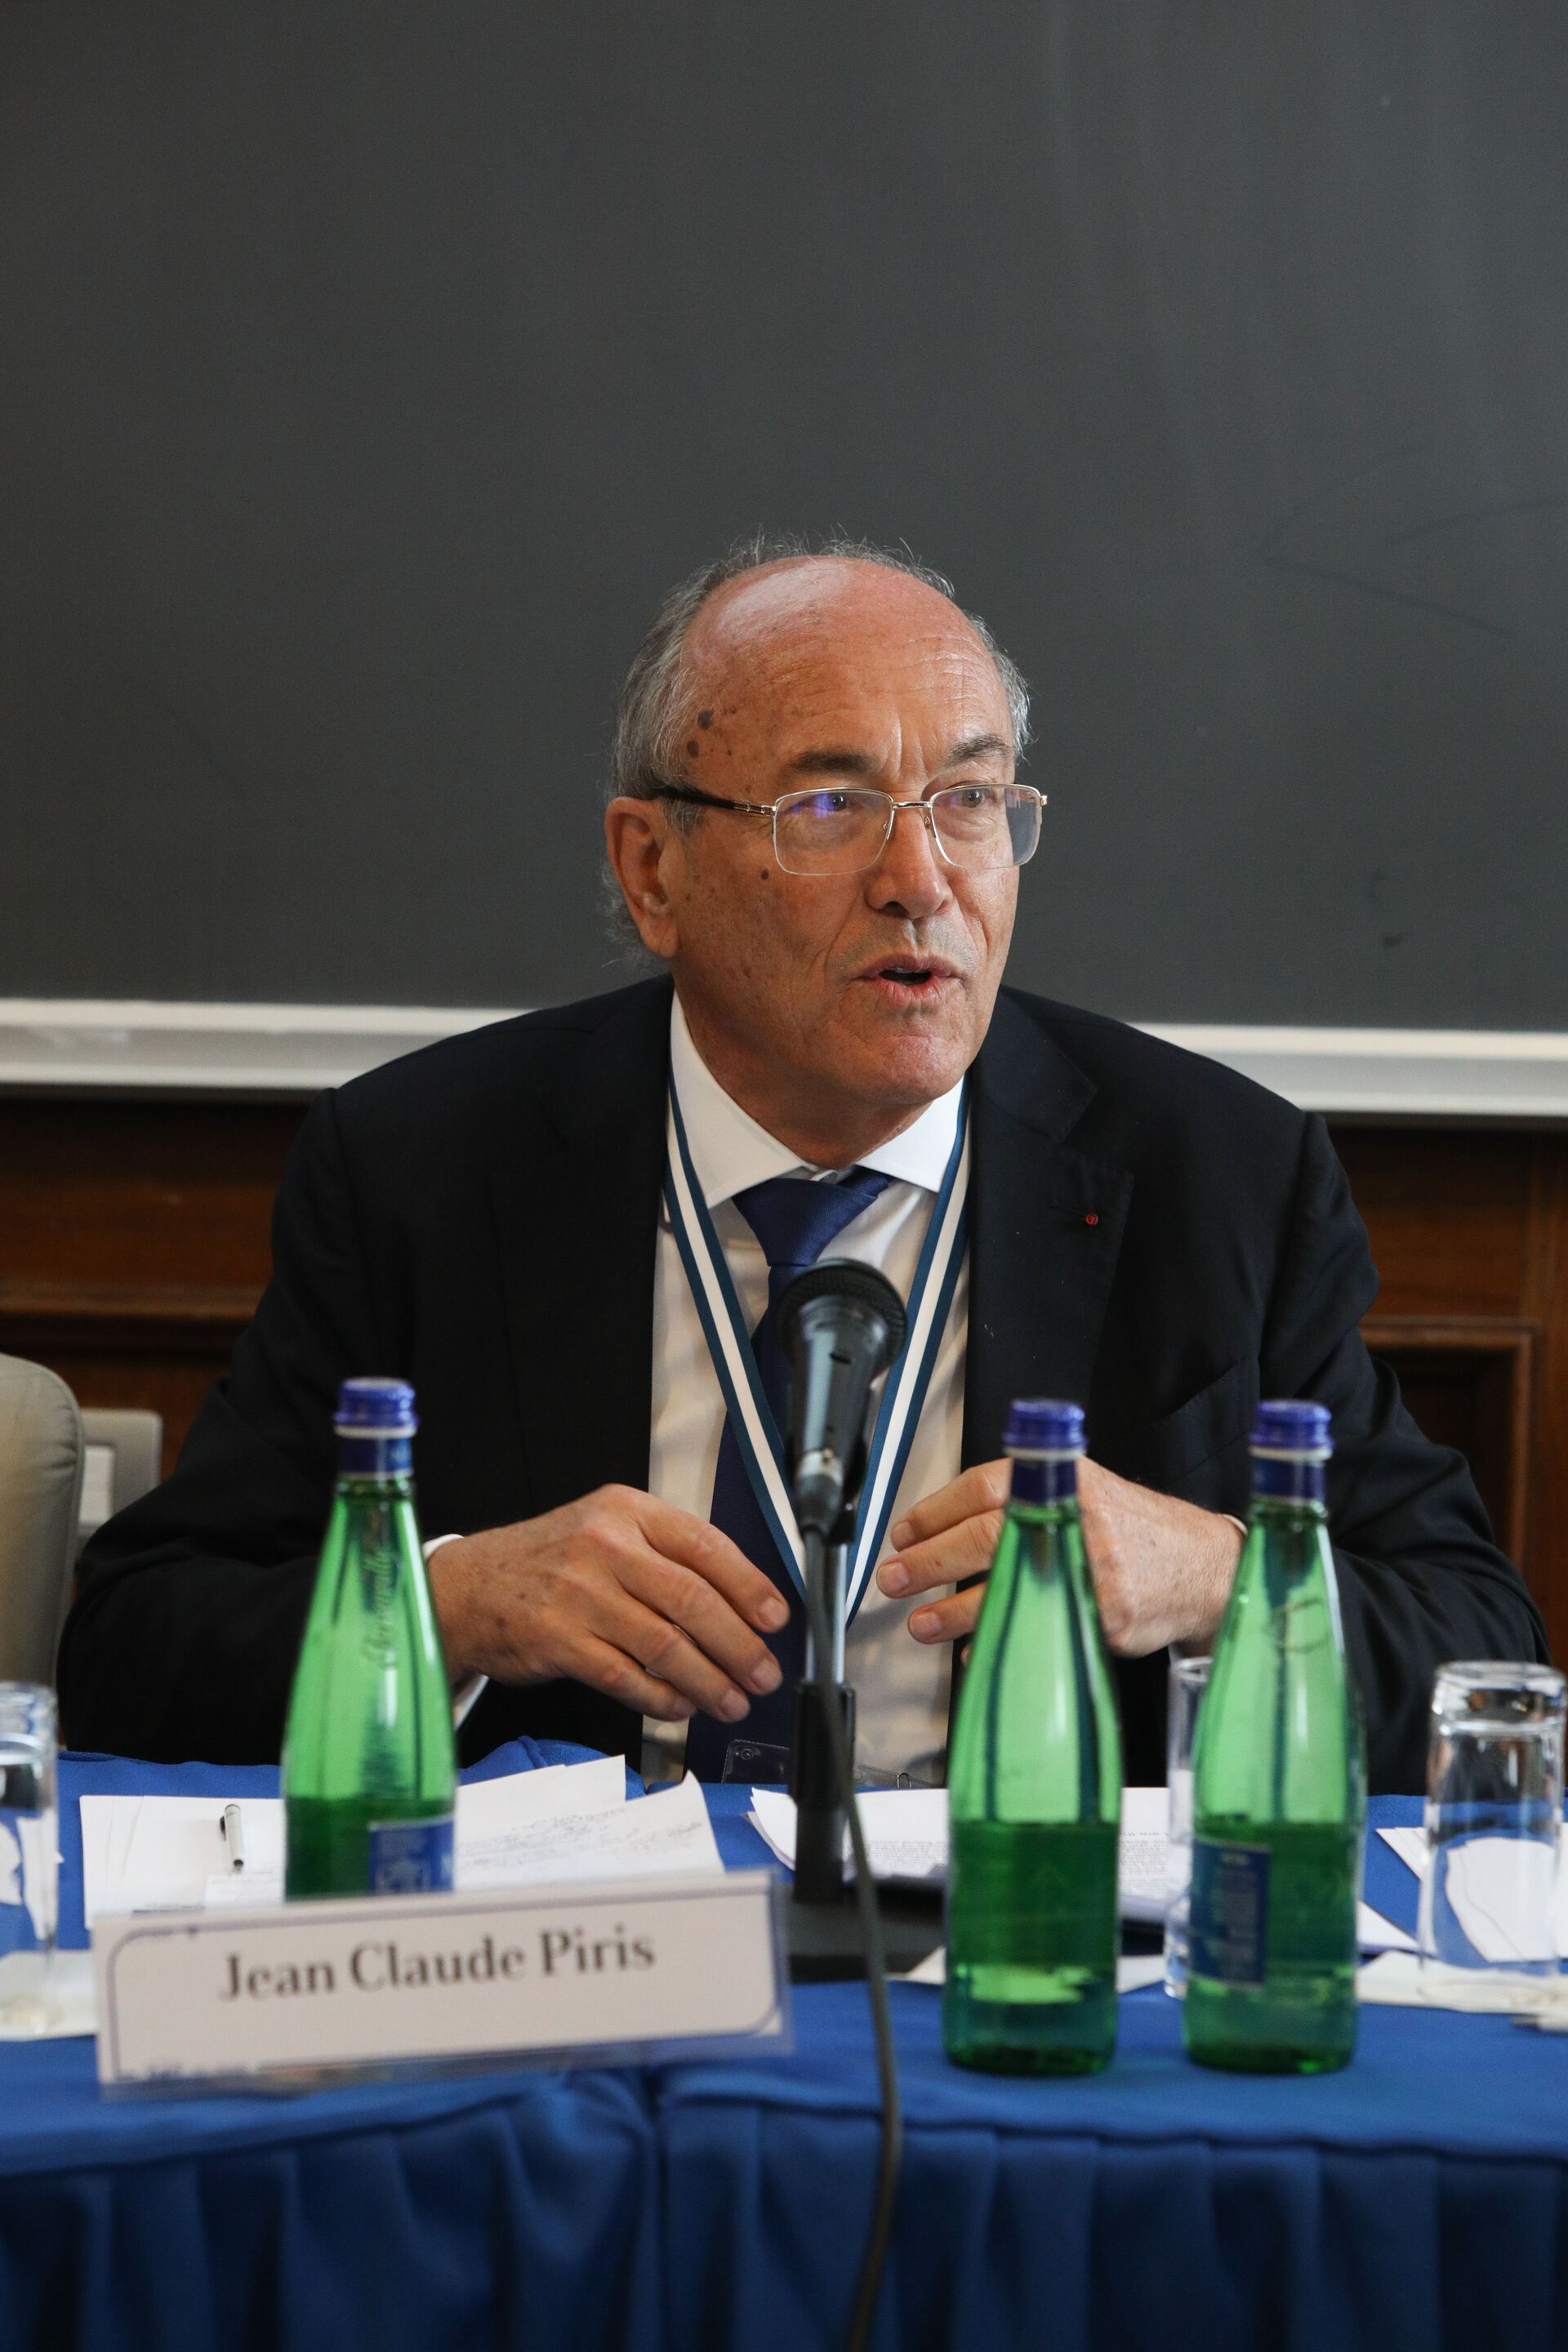 Jean-Claude Piris at the debate on the future of Europe